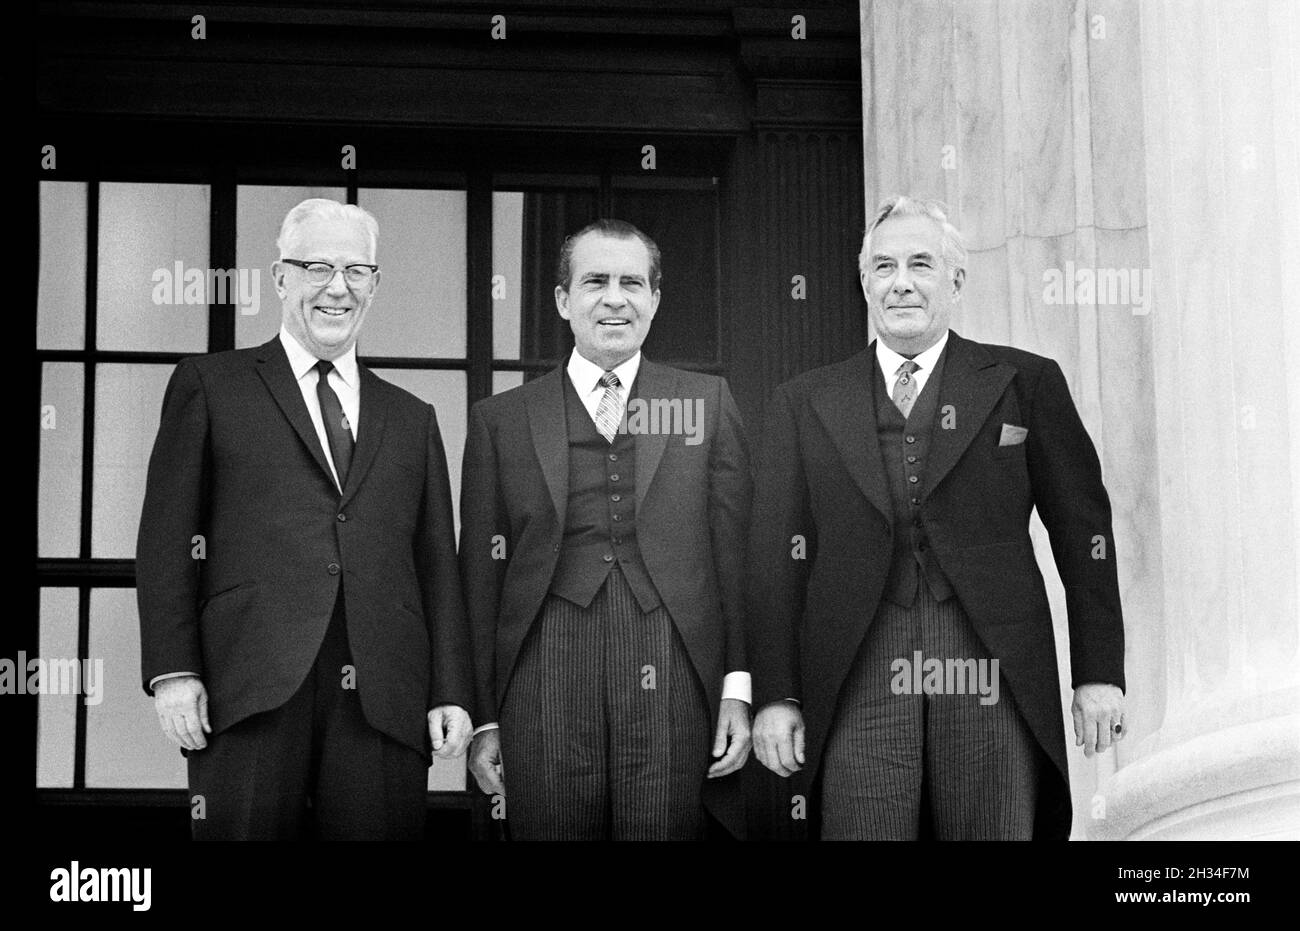 U.S. President Richard Nixon (center) with new Chief Justice Warren E. Burger (right), Washington, D.C., USA, Marion S. Trikosko, US News & World Report Magazine Collection, June 23, 1969 Stock Photo